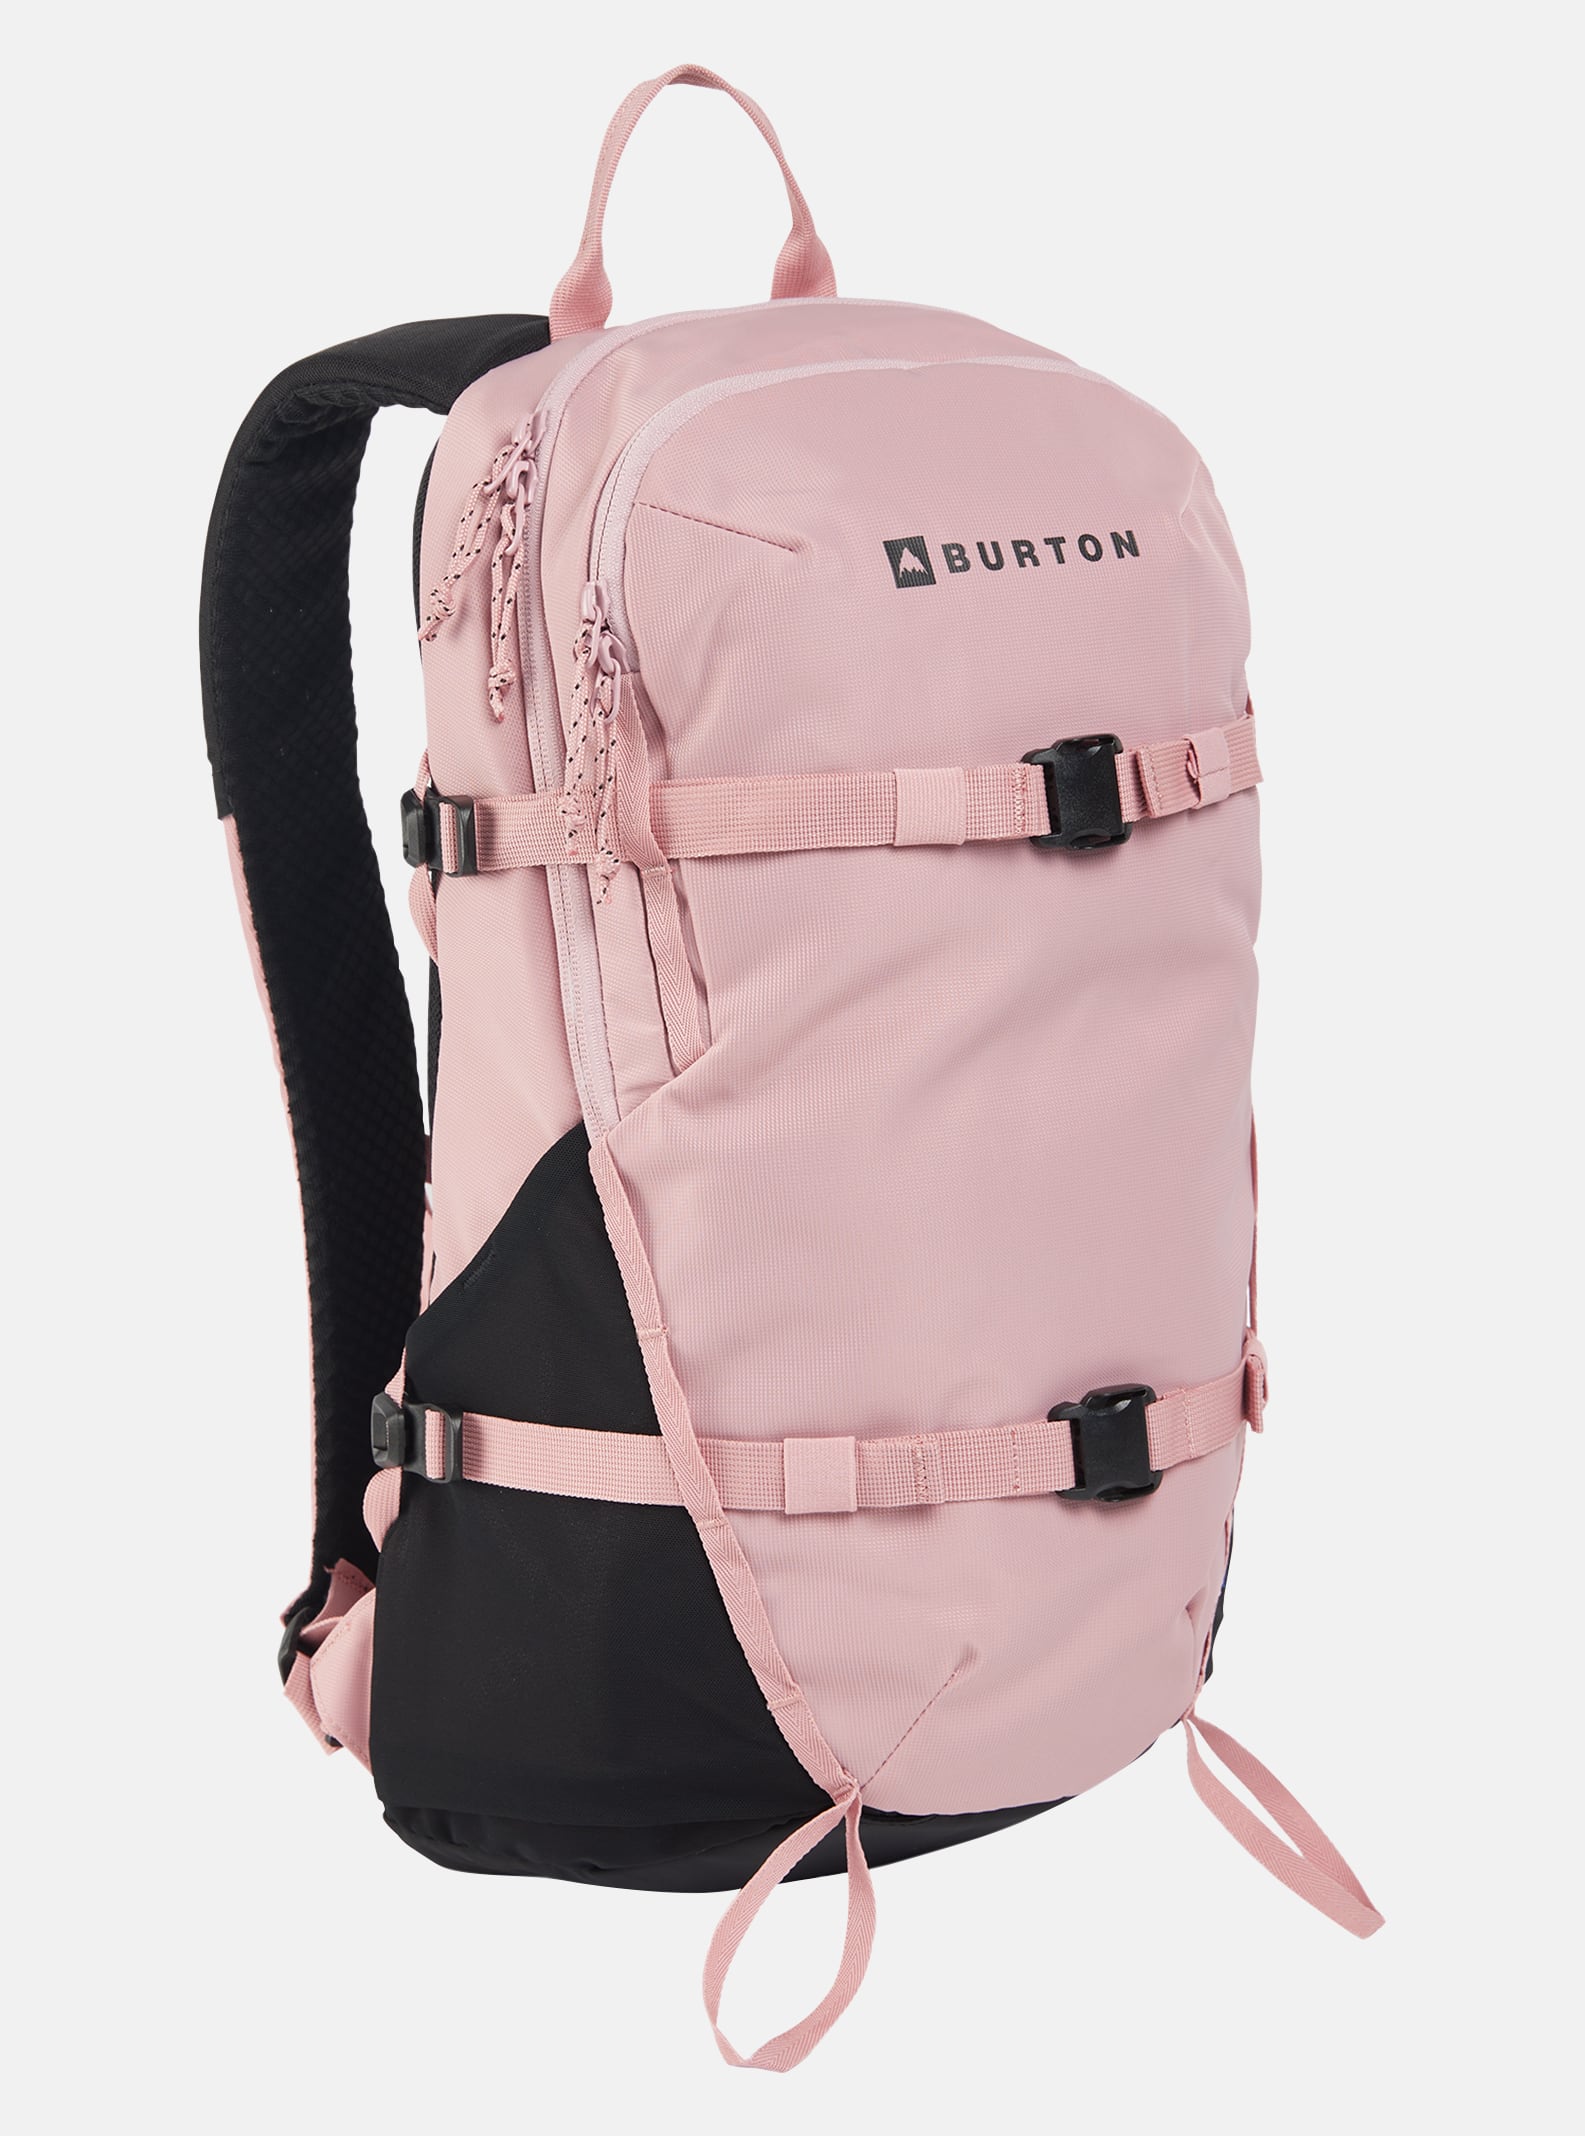 Burton Backpacks & Bags | Lifestyle, Technical & Commuter | Burton  Snowboards US